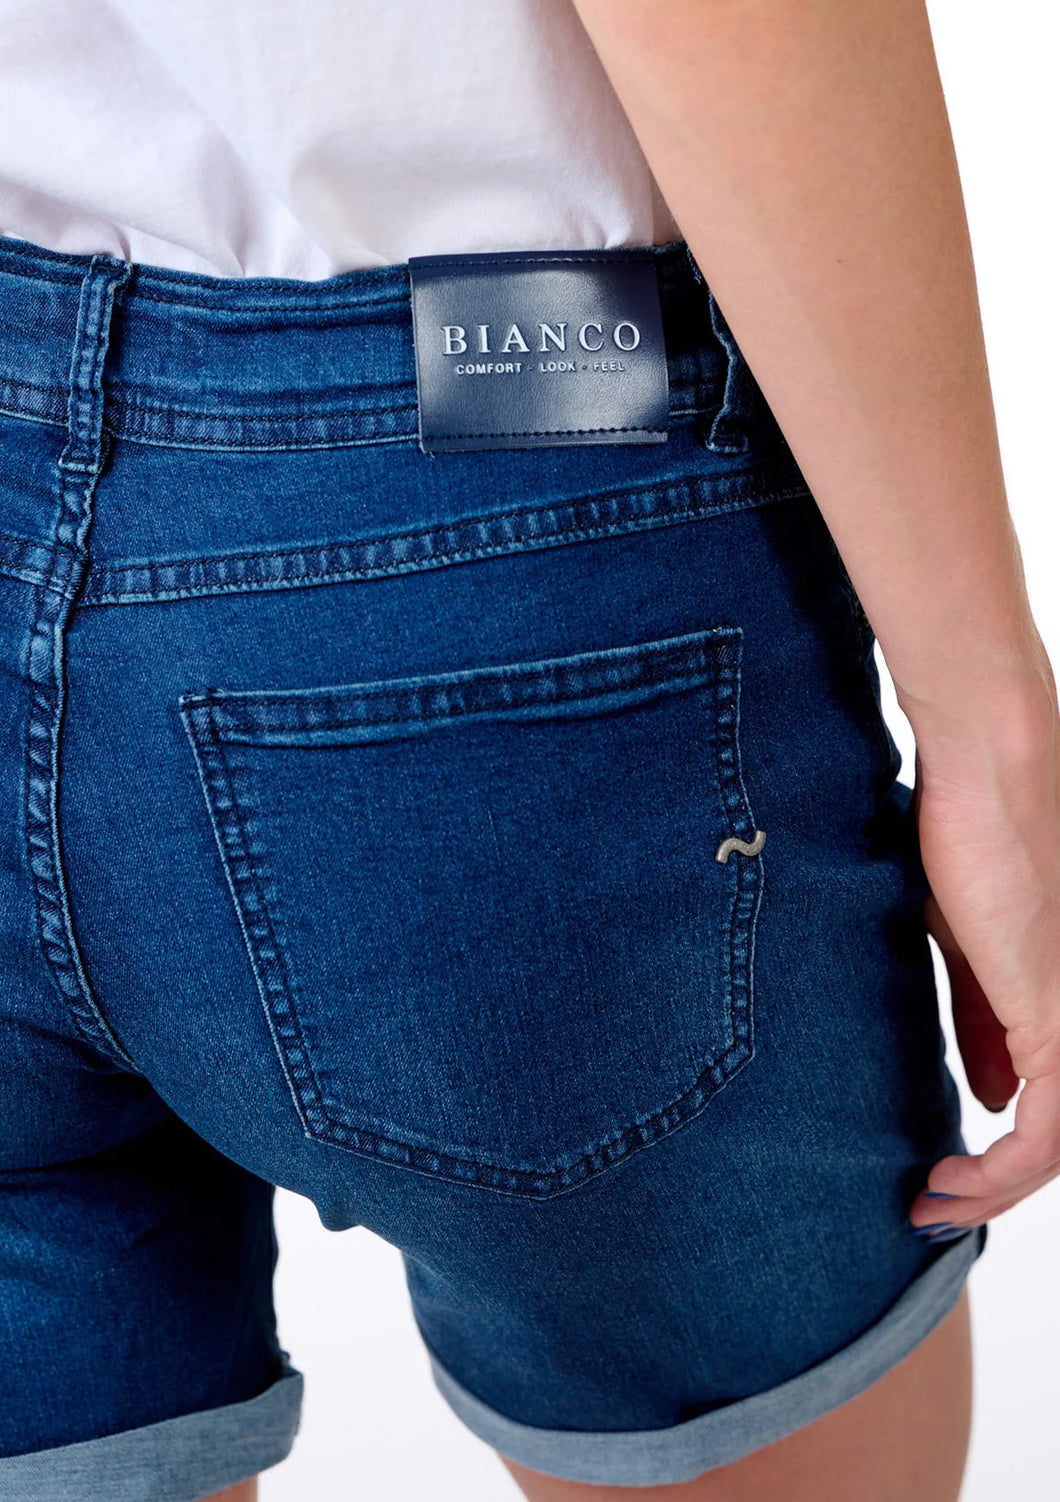 Bianco Jeans - Anyolite Shorts, Dark Blue